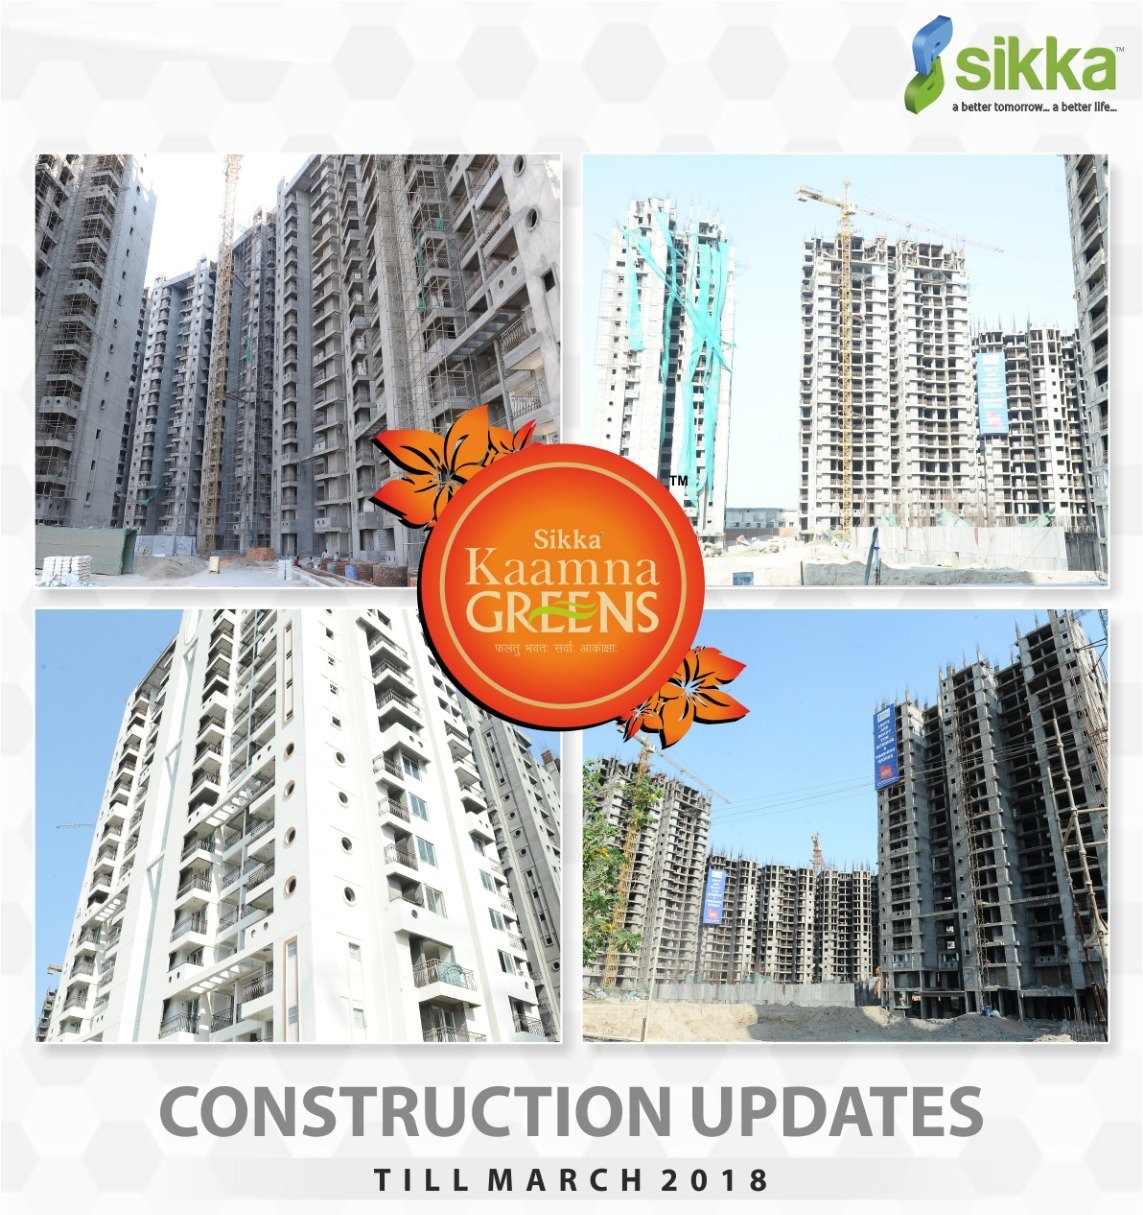 Construction updates of Sikka Kaamna Greens in Noida Update